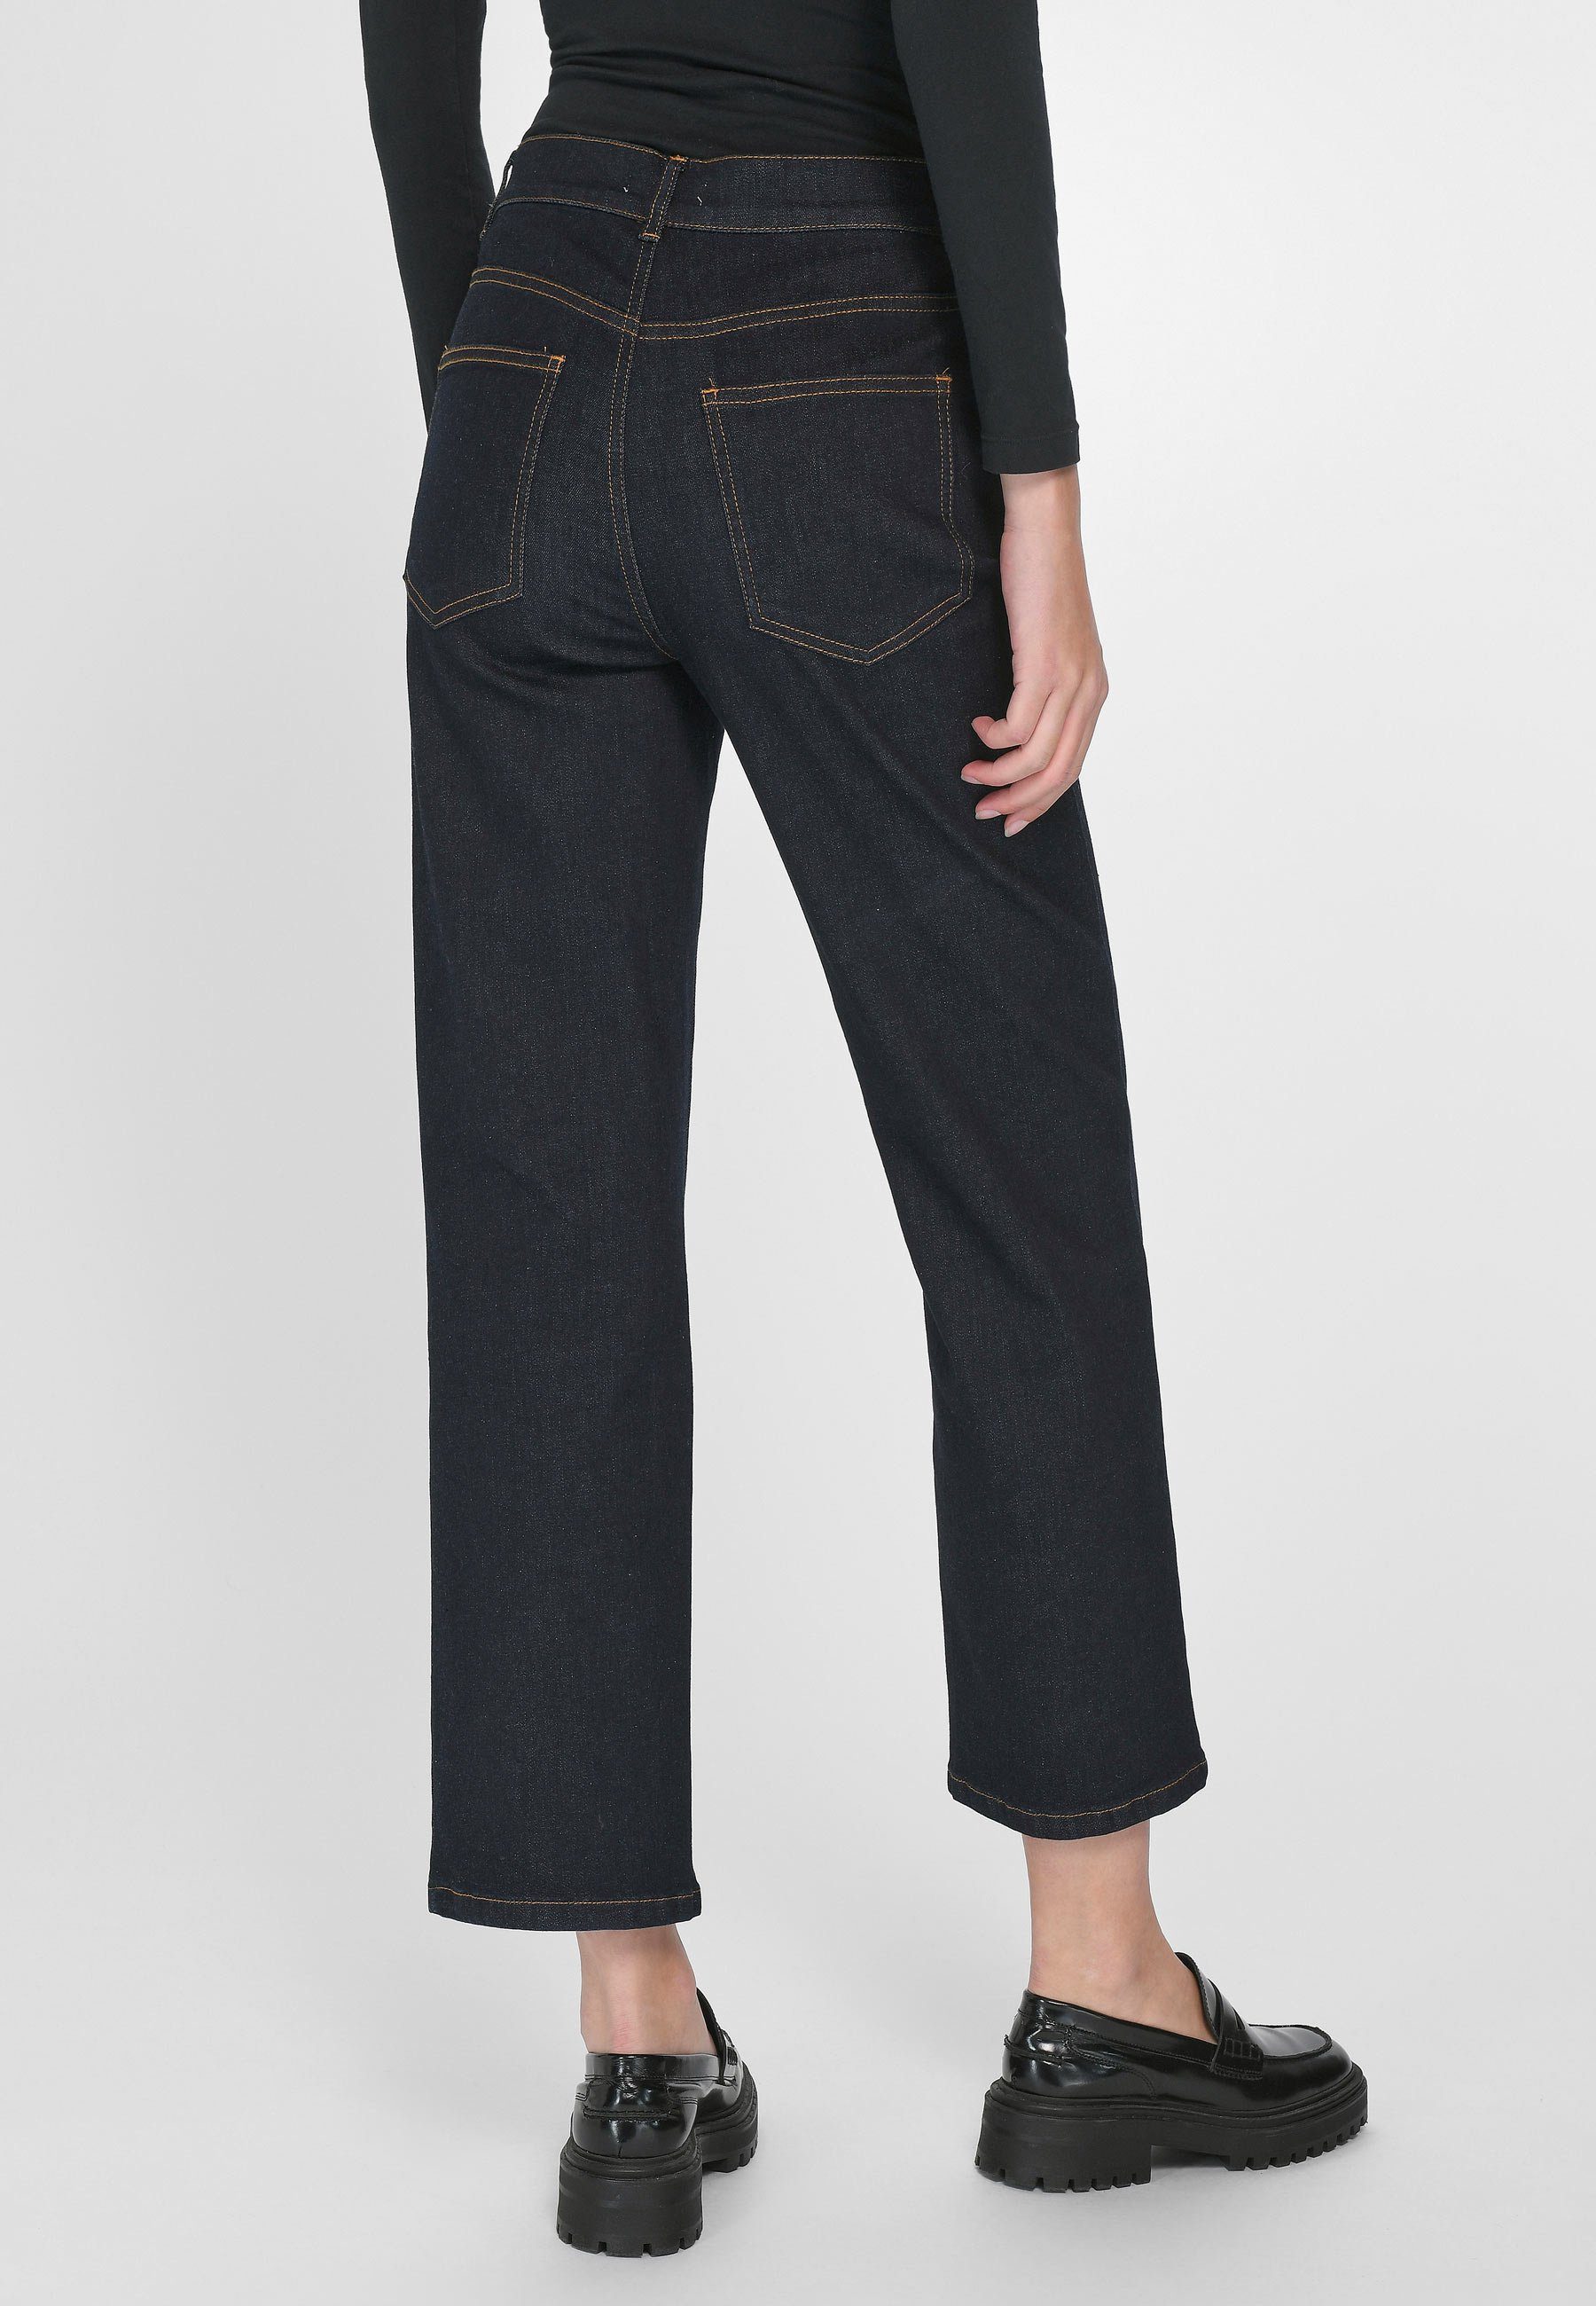 Cotton WALL 5-Pocket-Jeans modernem Design dunkelblau mit London